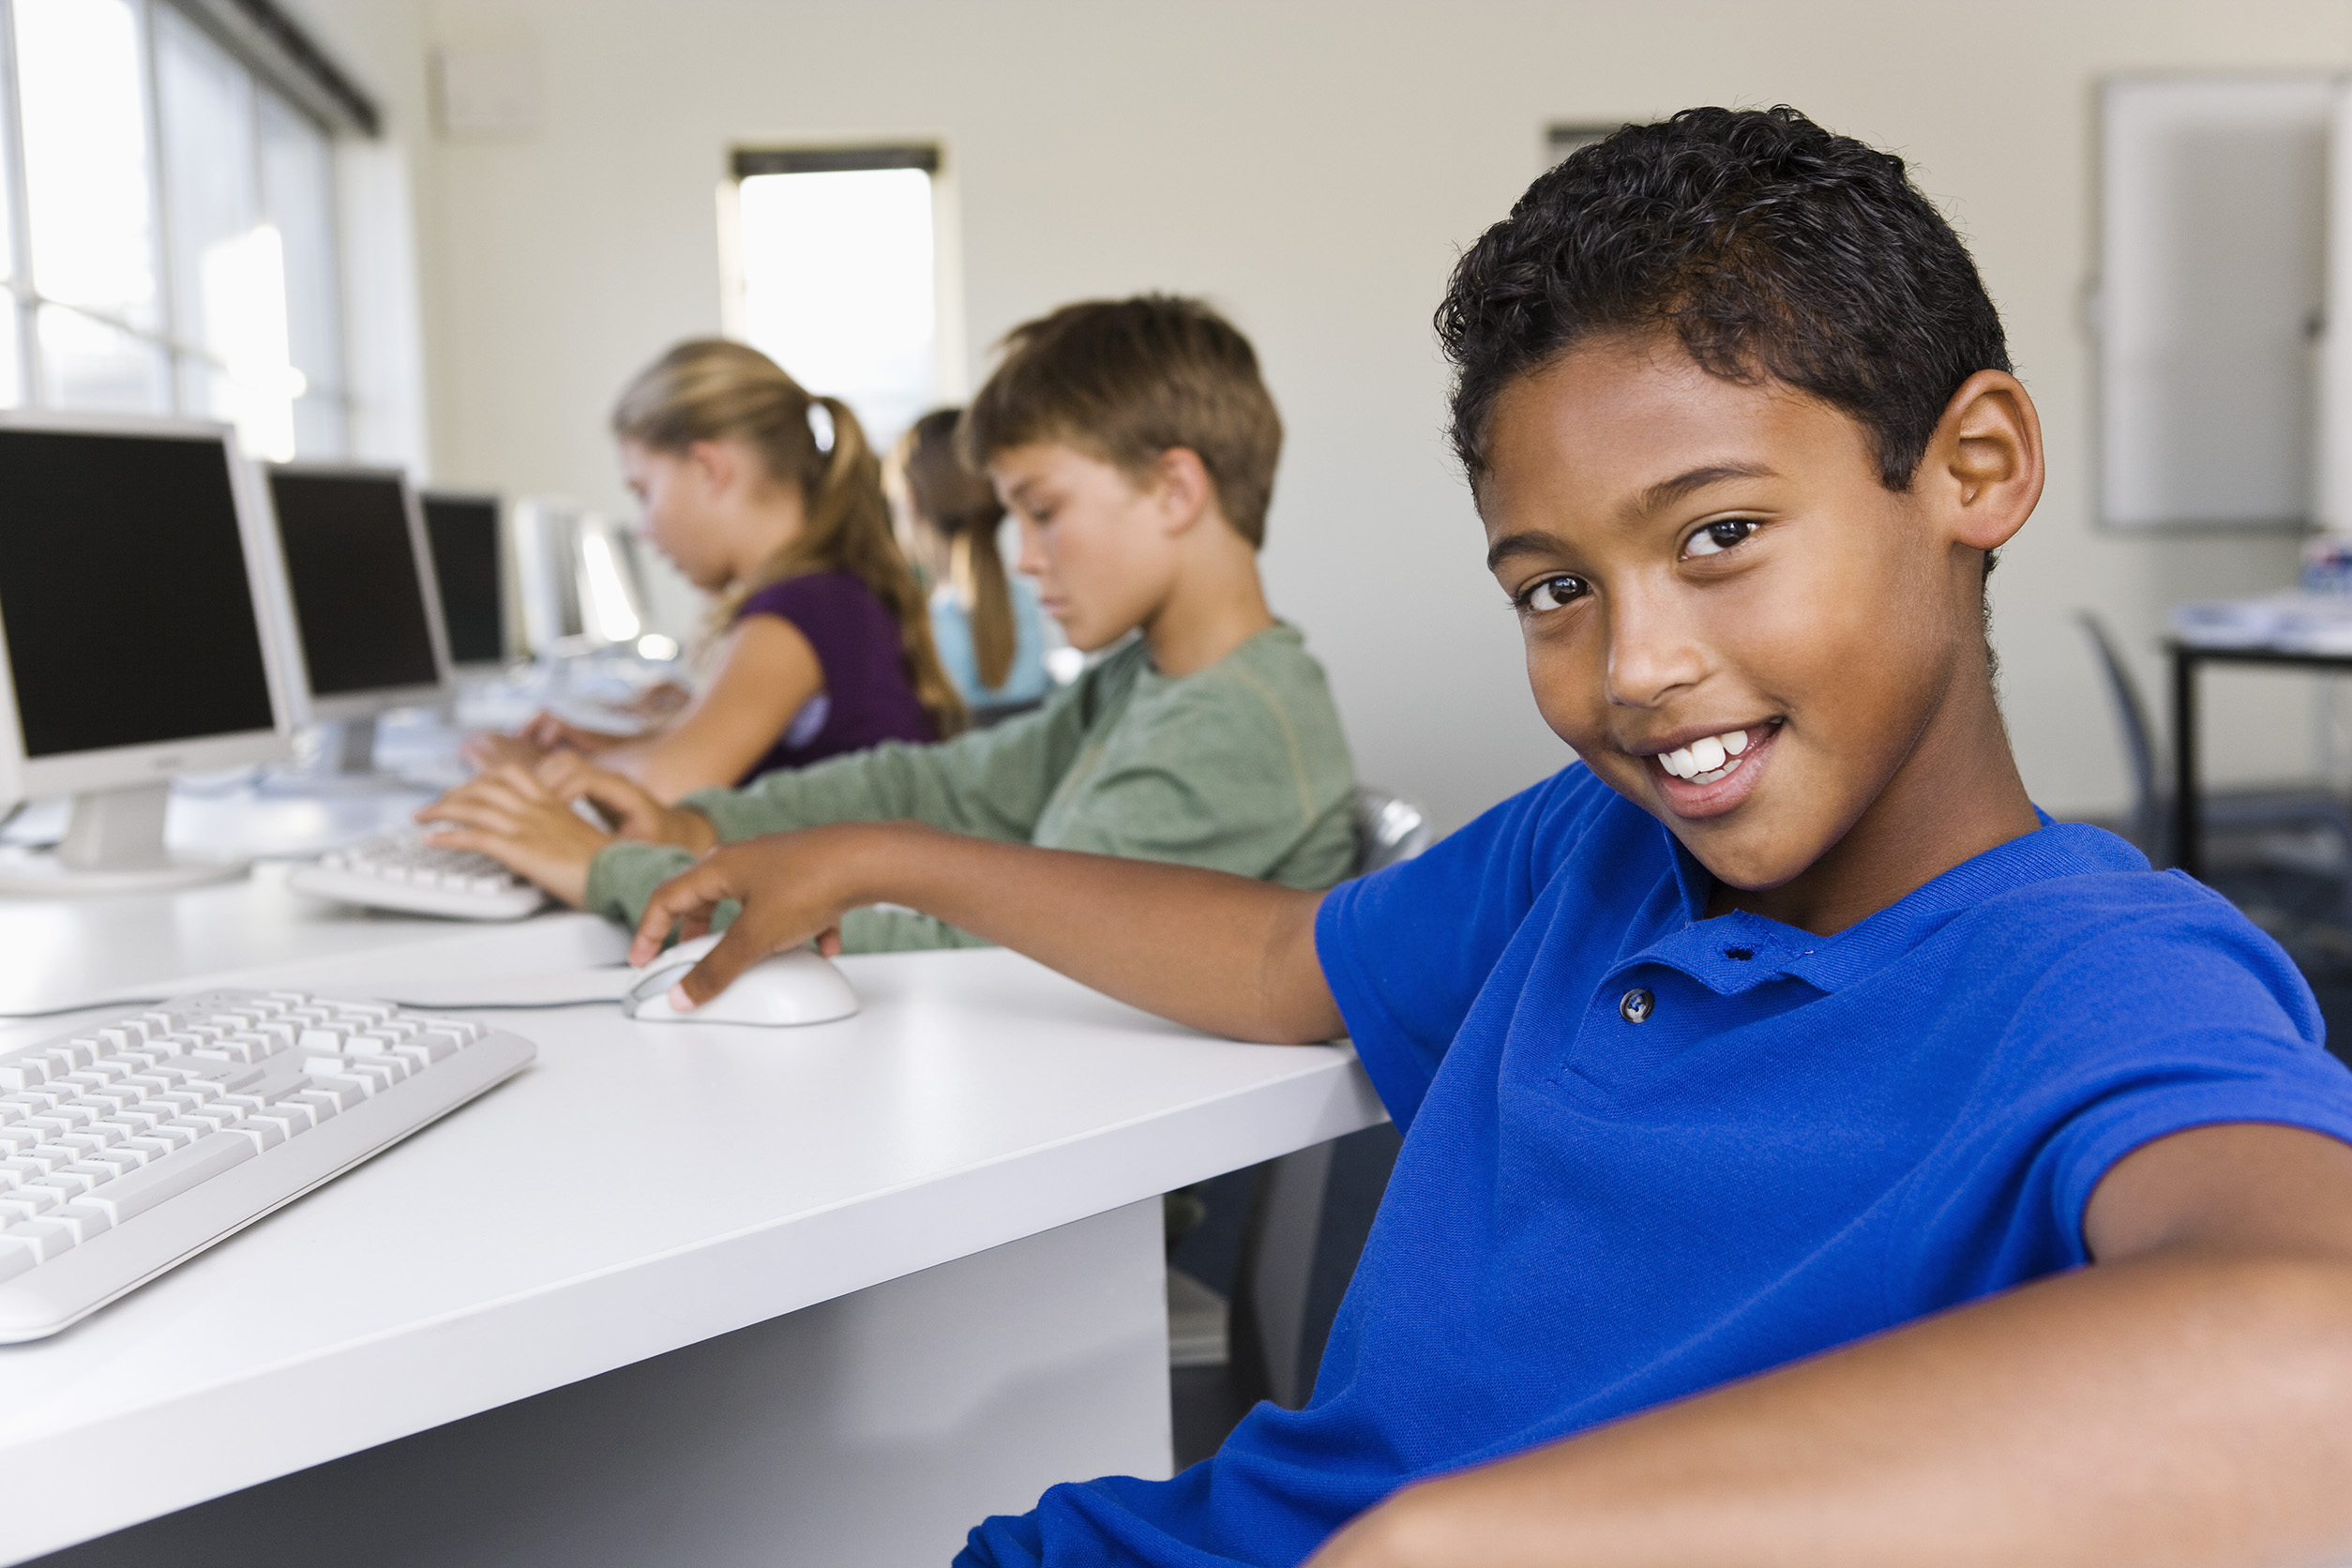 It Kids. Information Technology is Kids. Using Technologies for Kids. It Schools 3d. Getting new skills